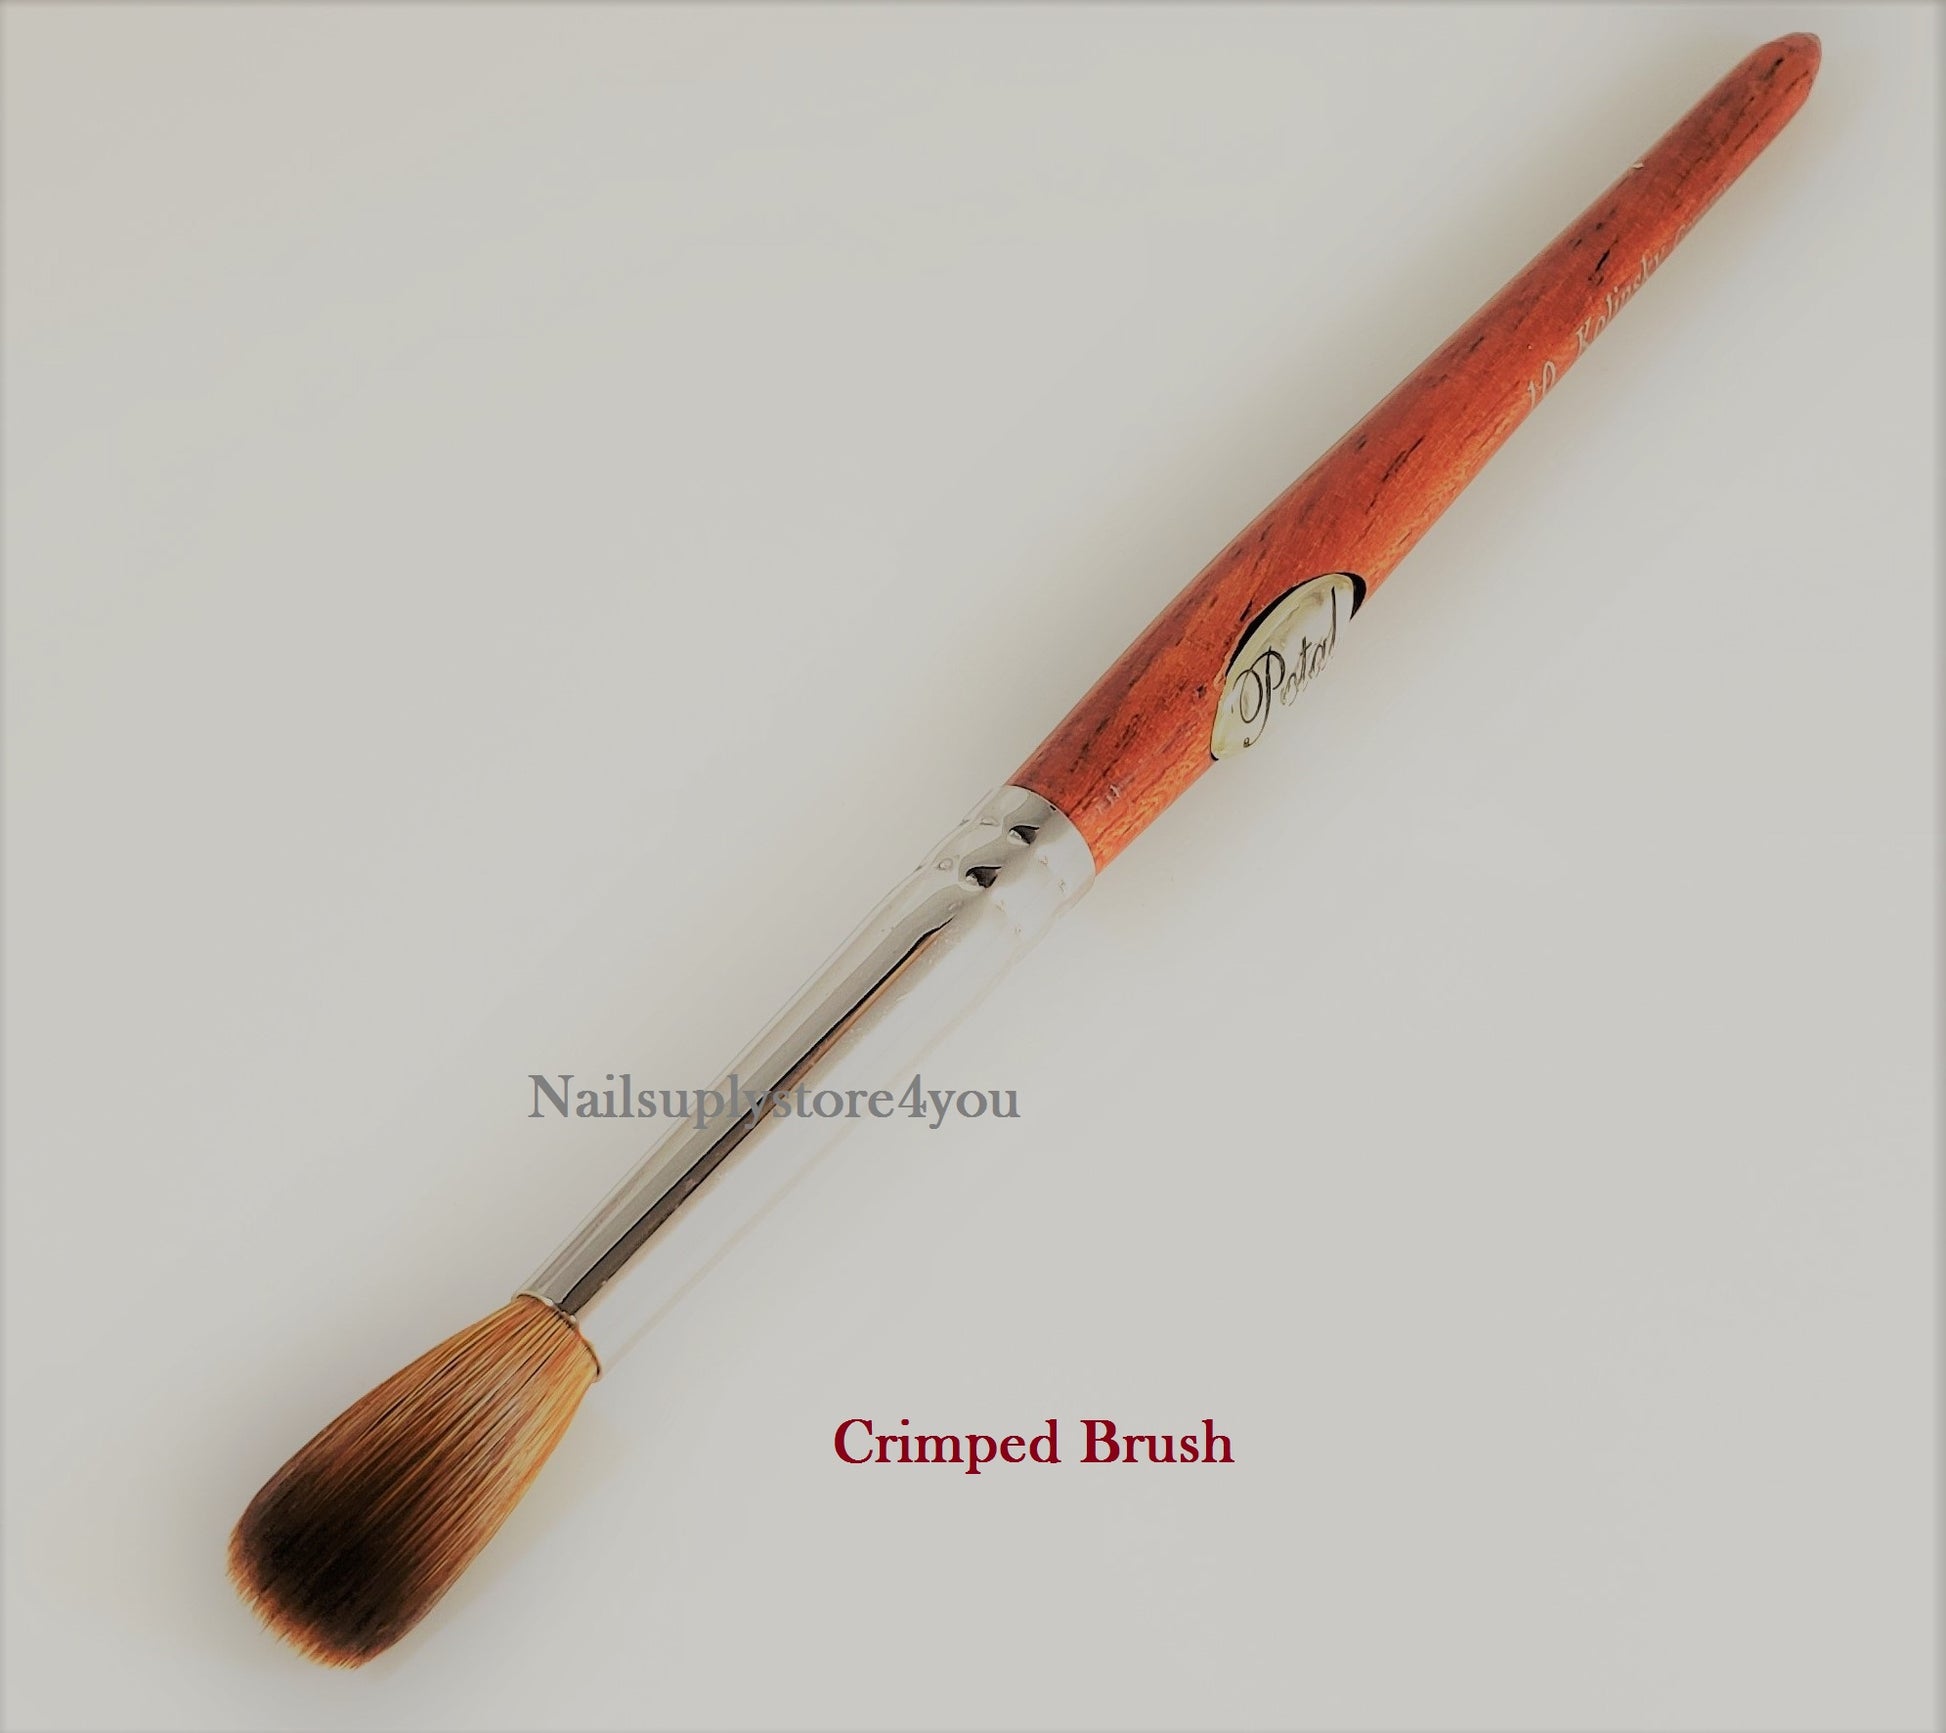 GreatNeck 19025 Fingernail Brushes Red Hard Bristle Nail Brushes